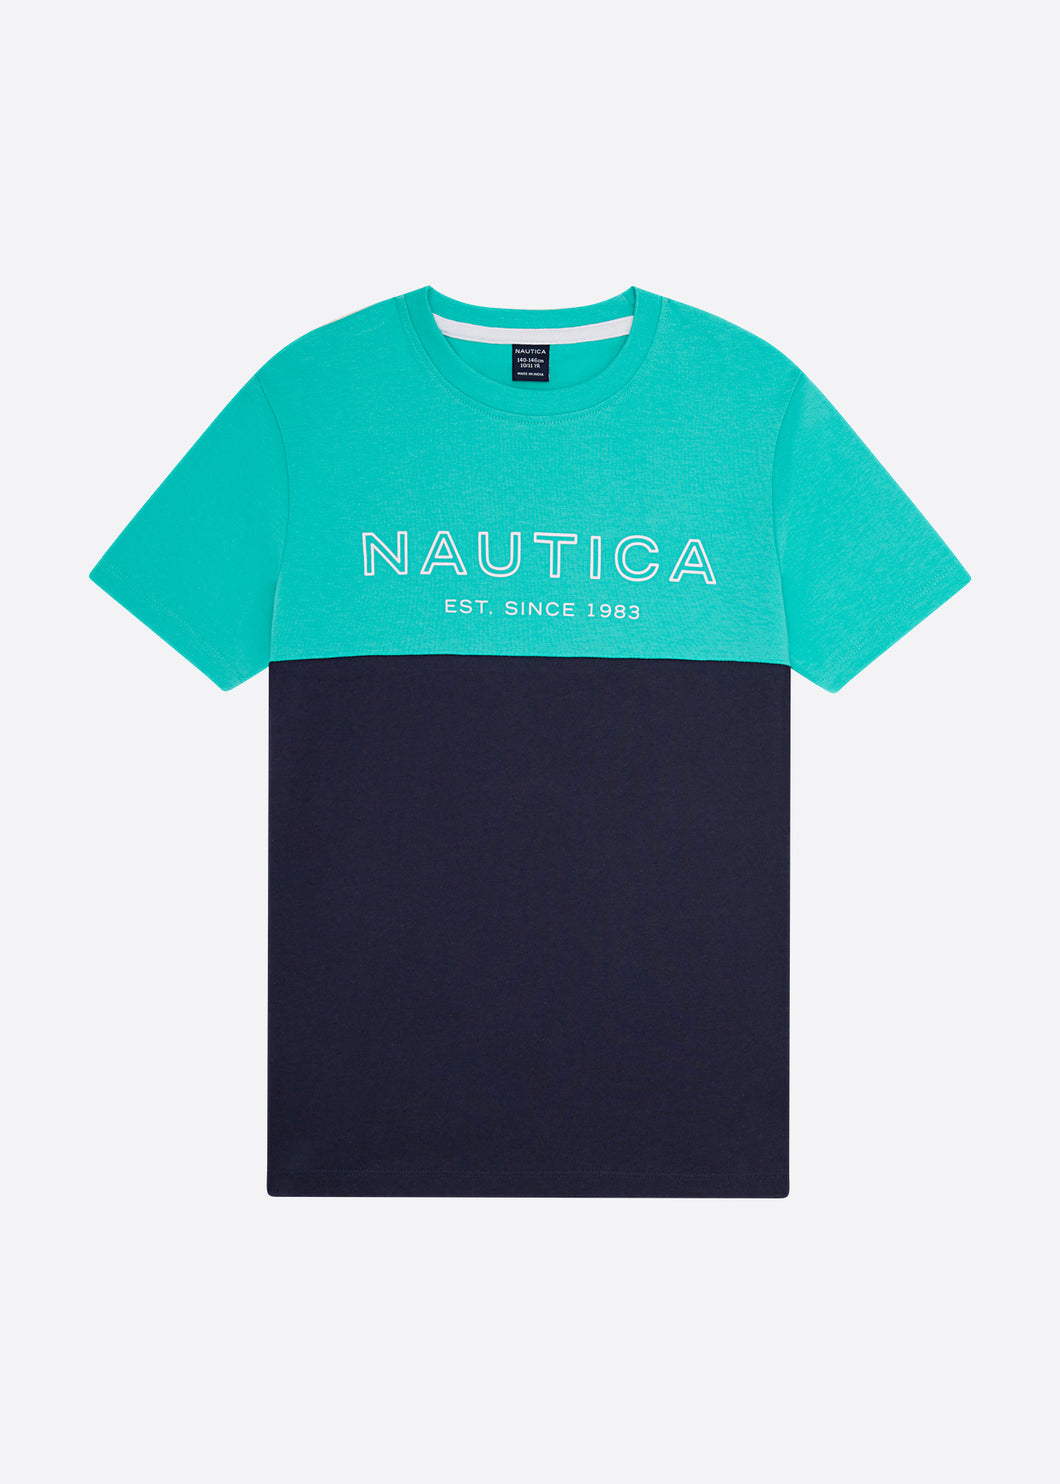 Nautica Kylo T-Shirt - Mint - Front